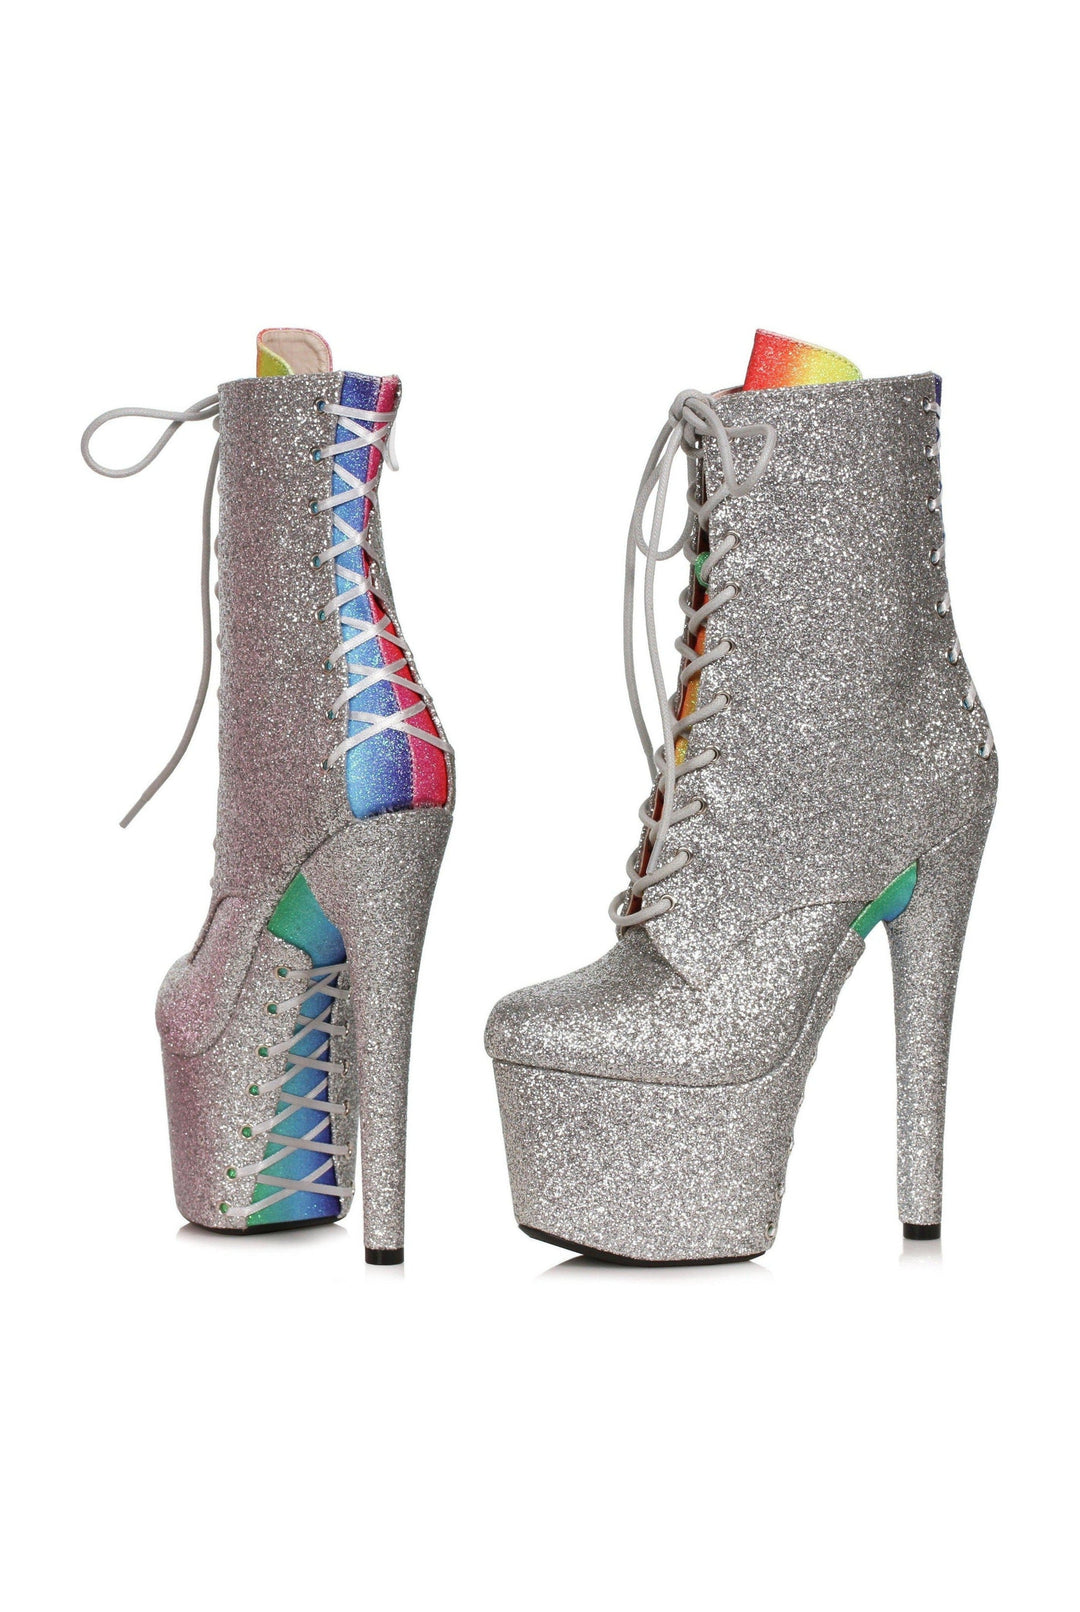 Ellie Shoes Silver Ankle Boots Platform Stripper Shoes | Buy at Sexyshoes.com